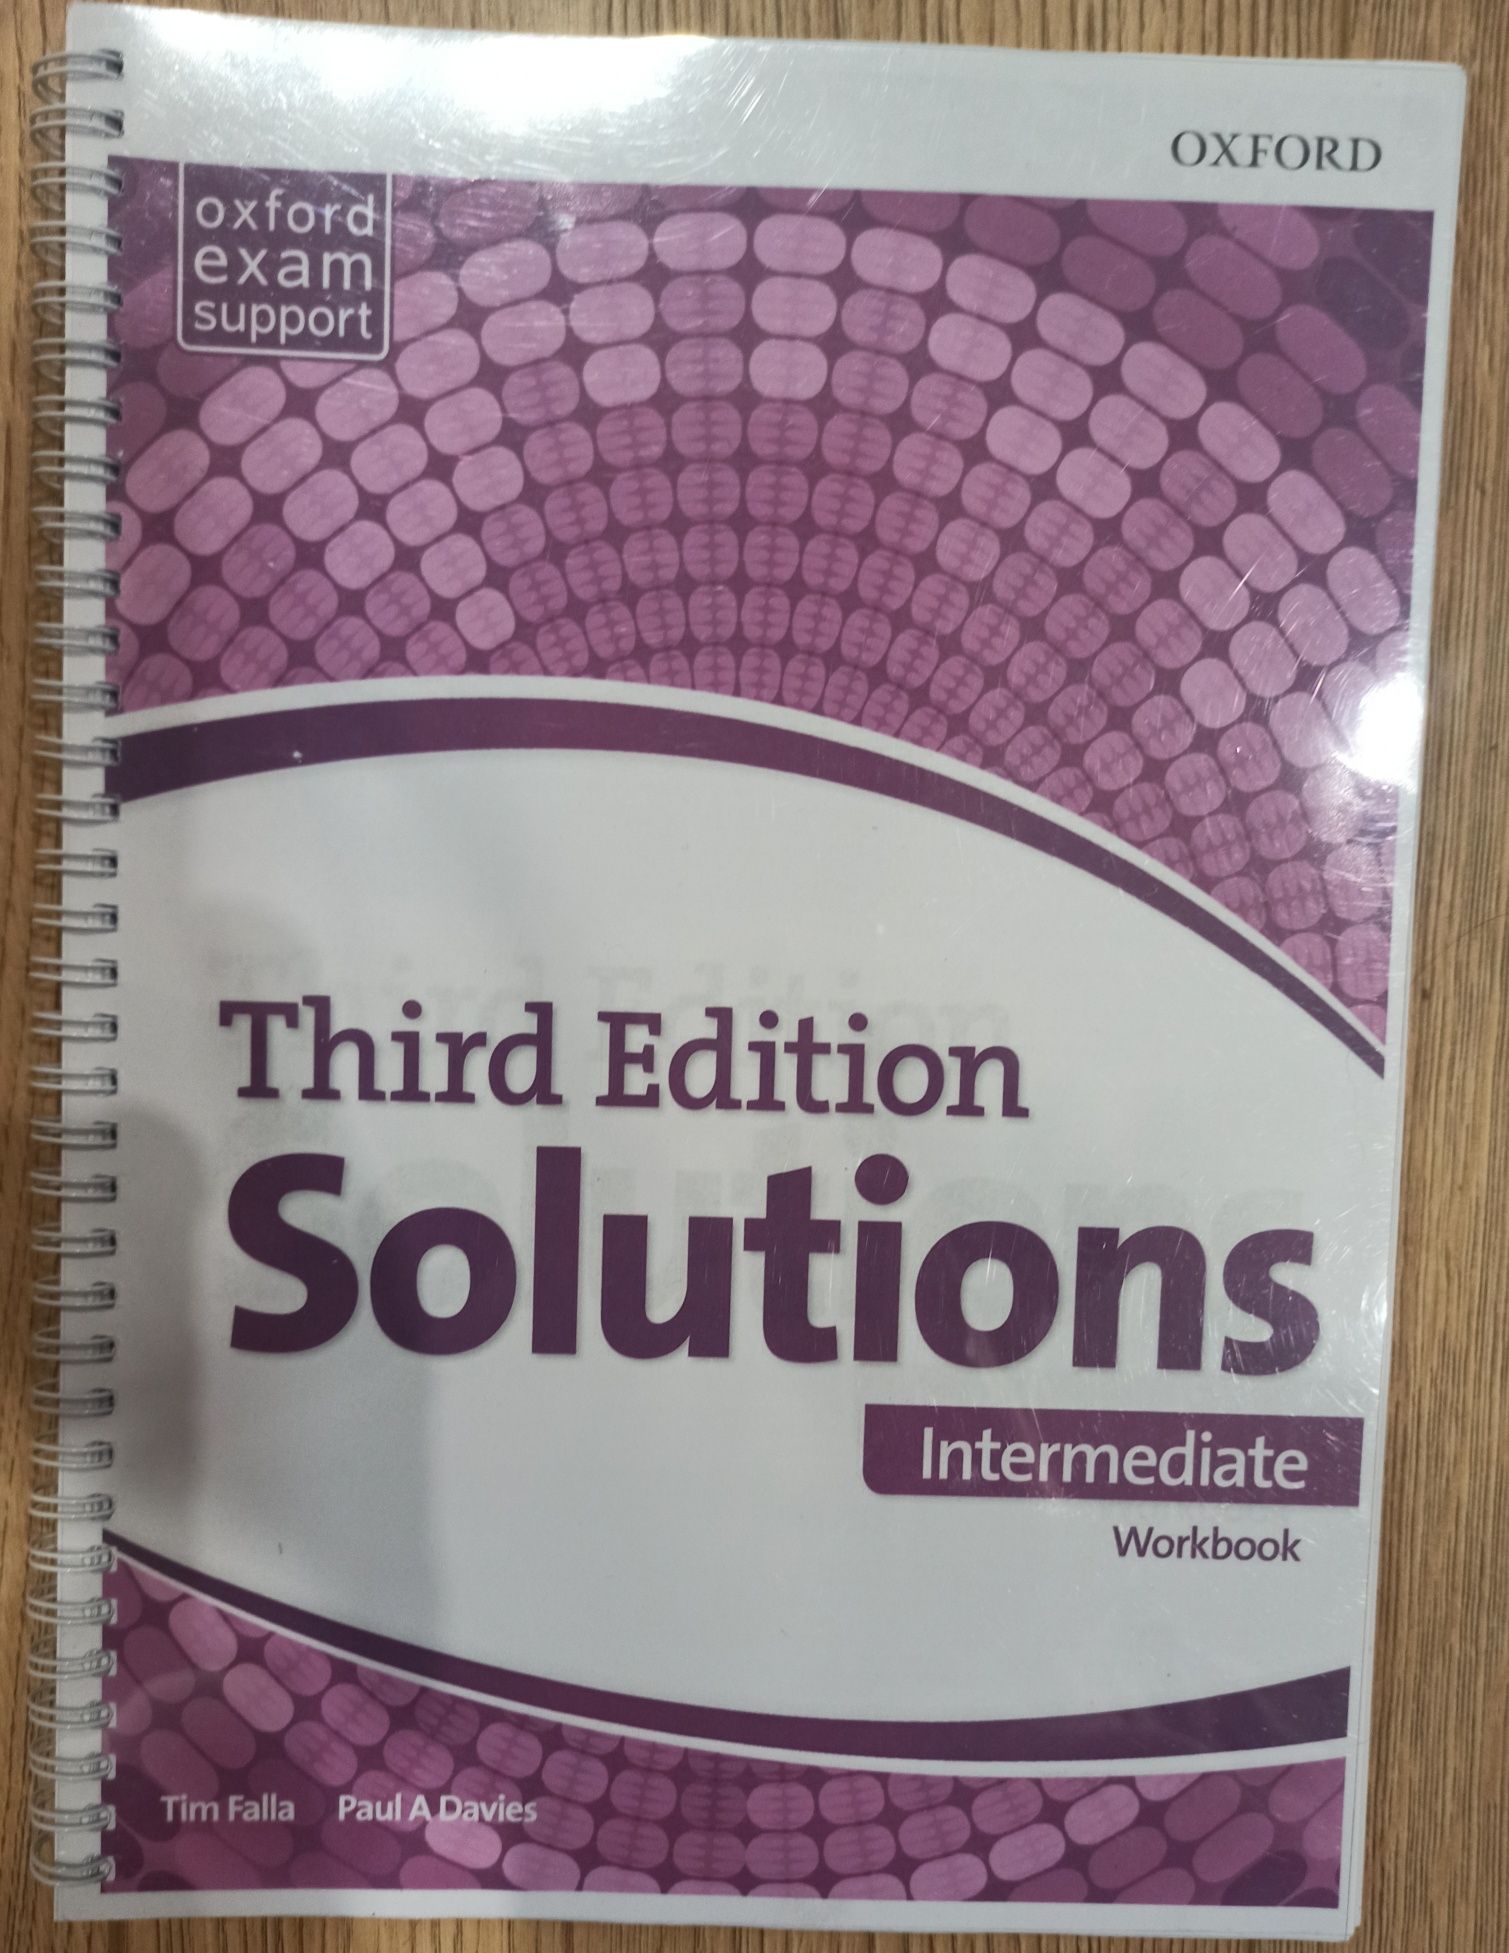 Підручники Third Edition Solutions Intermediate